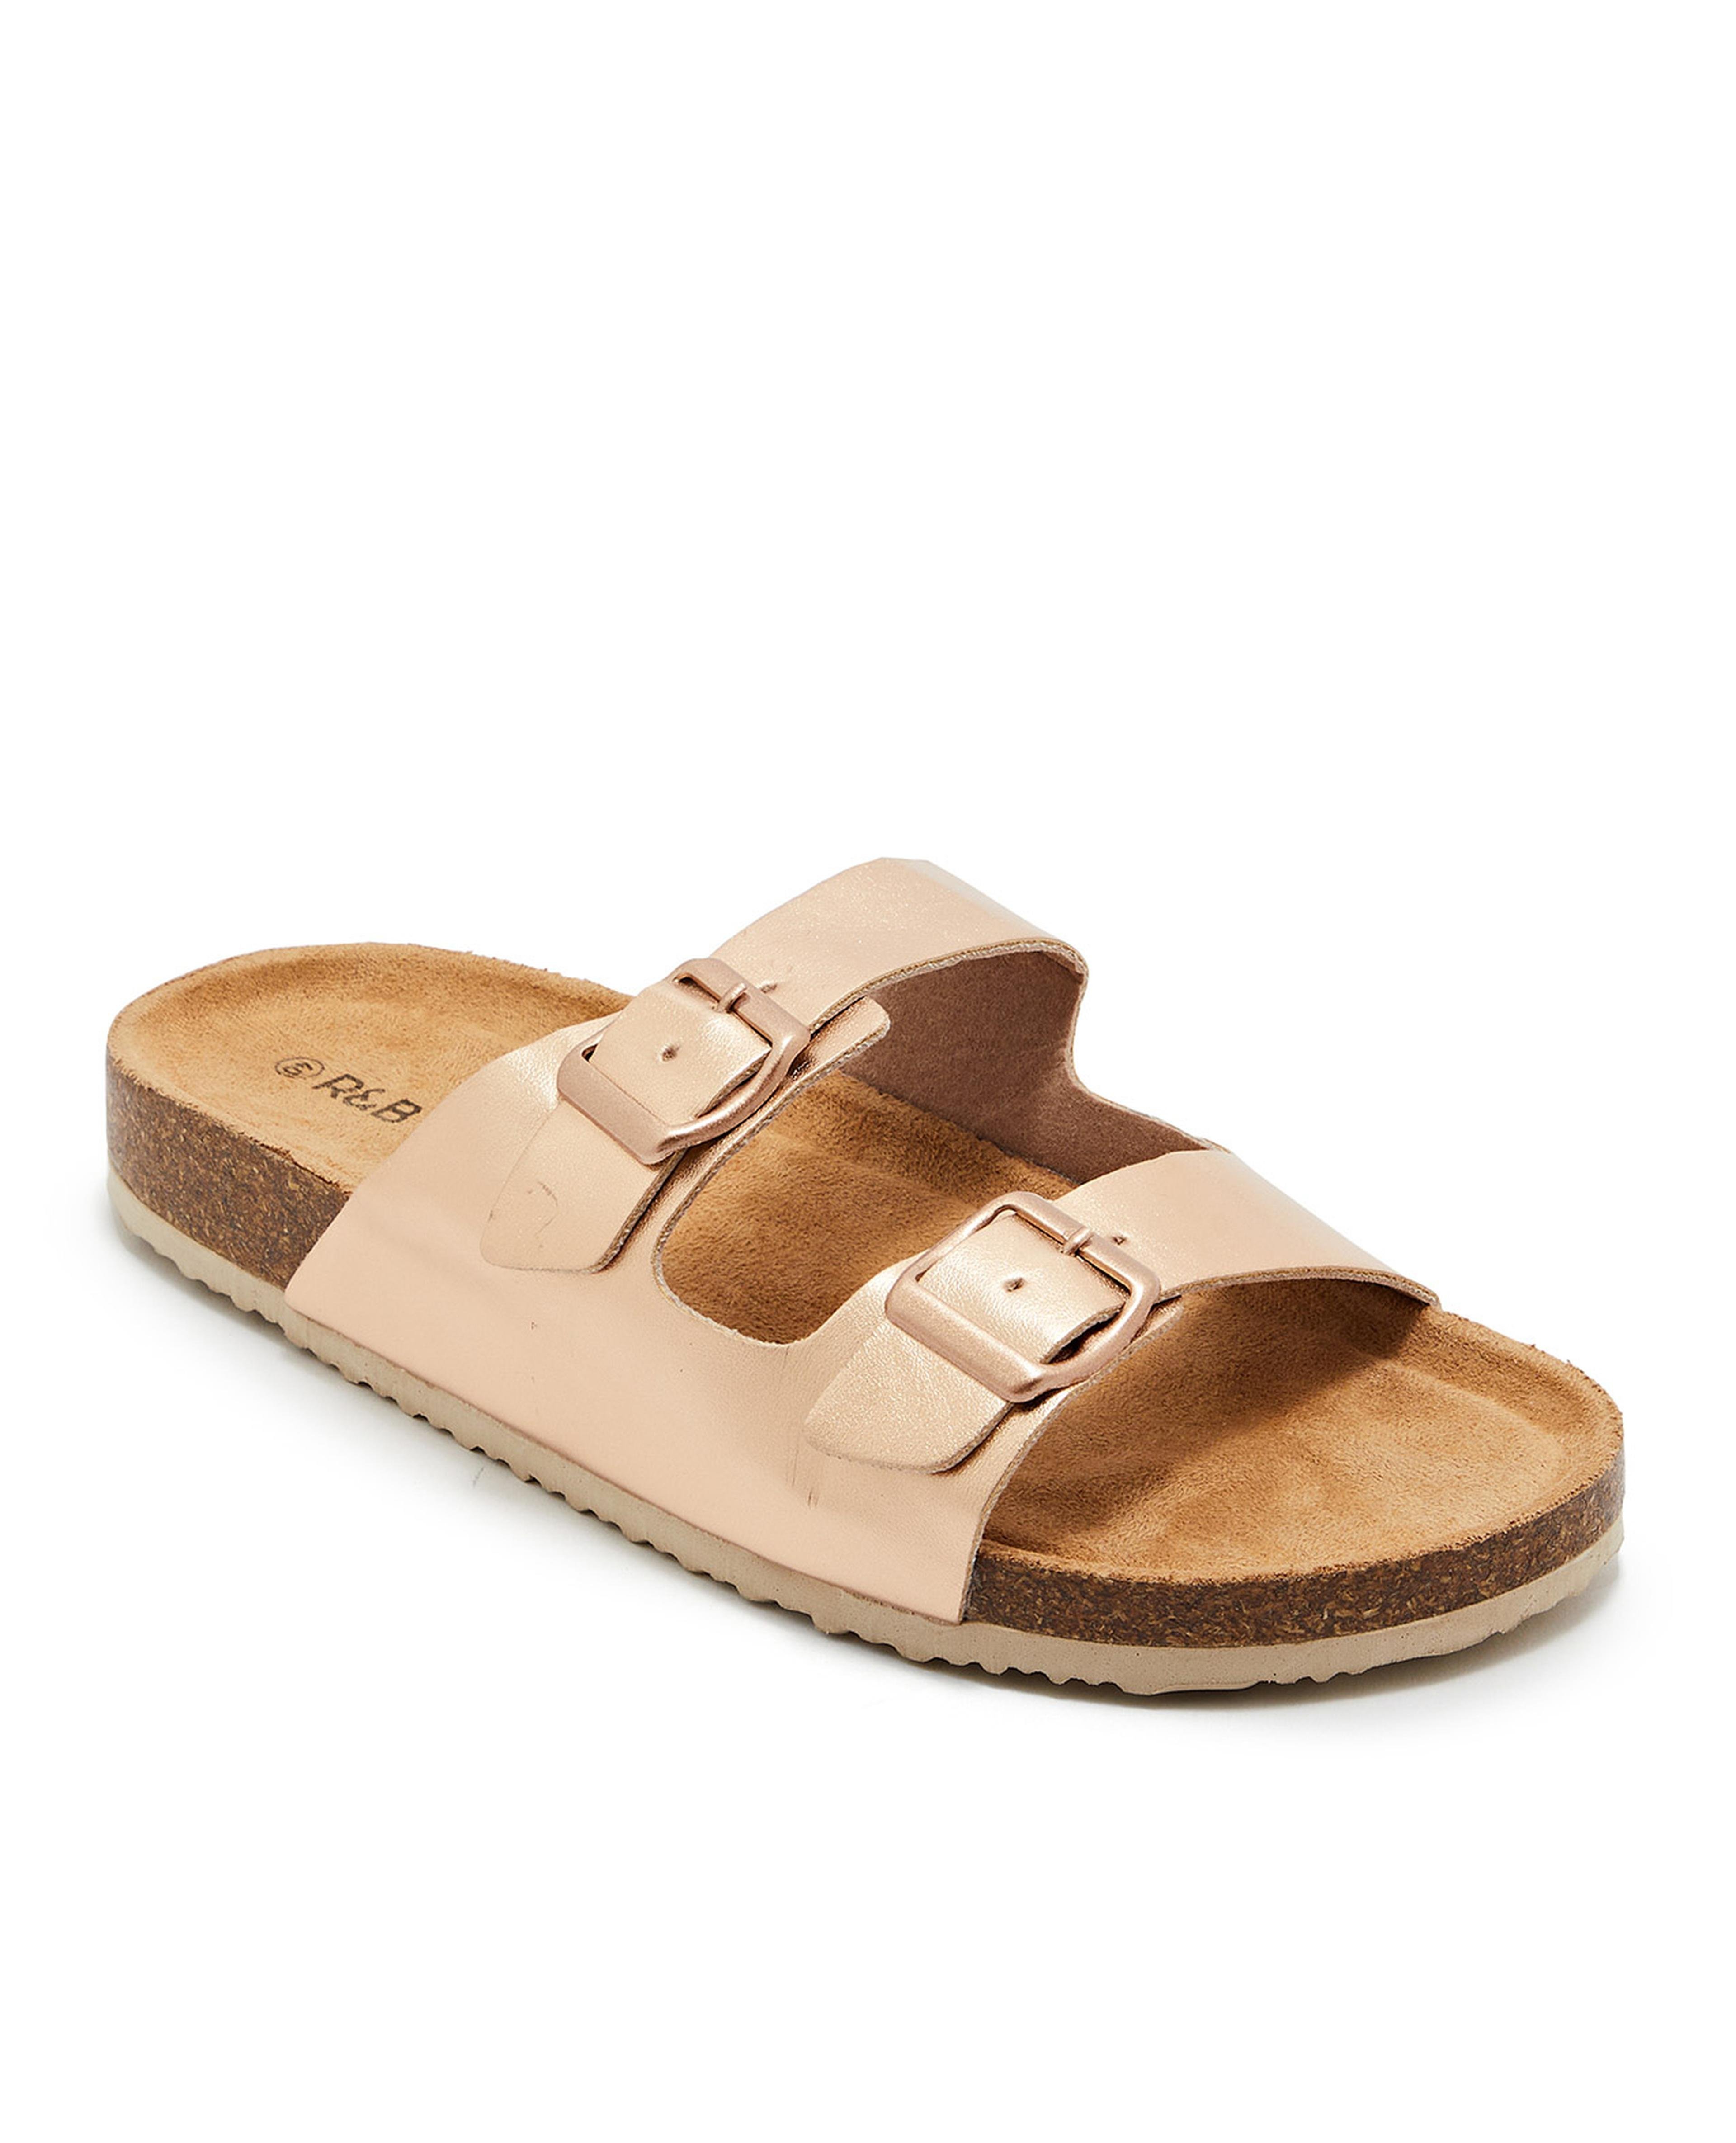 Shop Open-Toe Flatform Sandals Online | R&B UAE